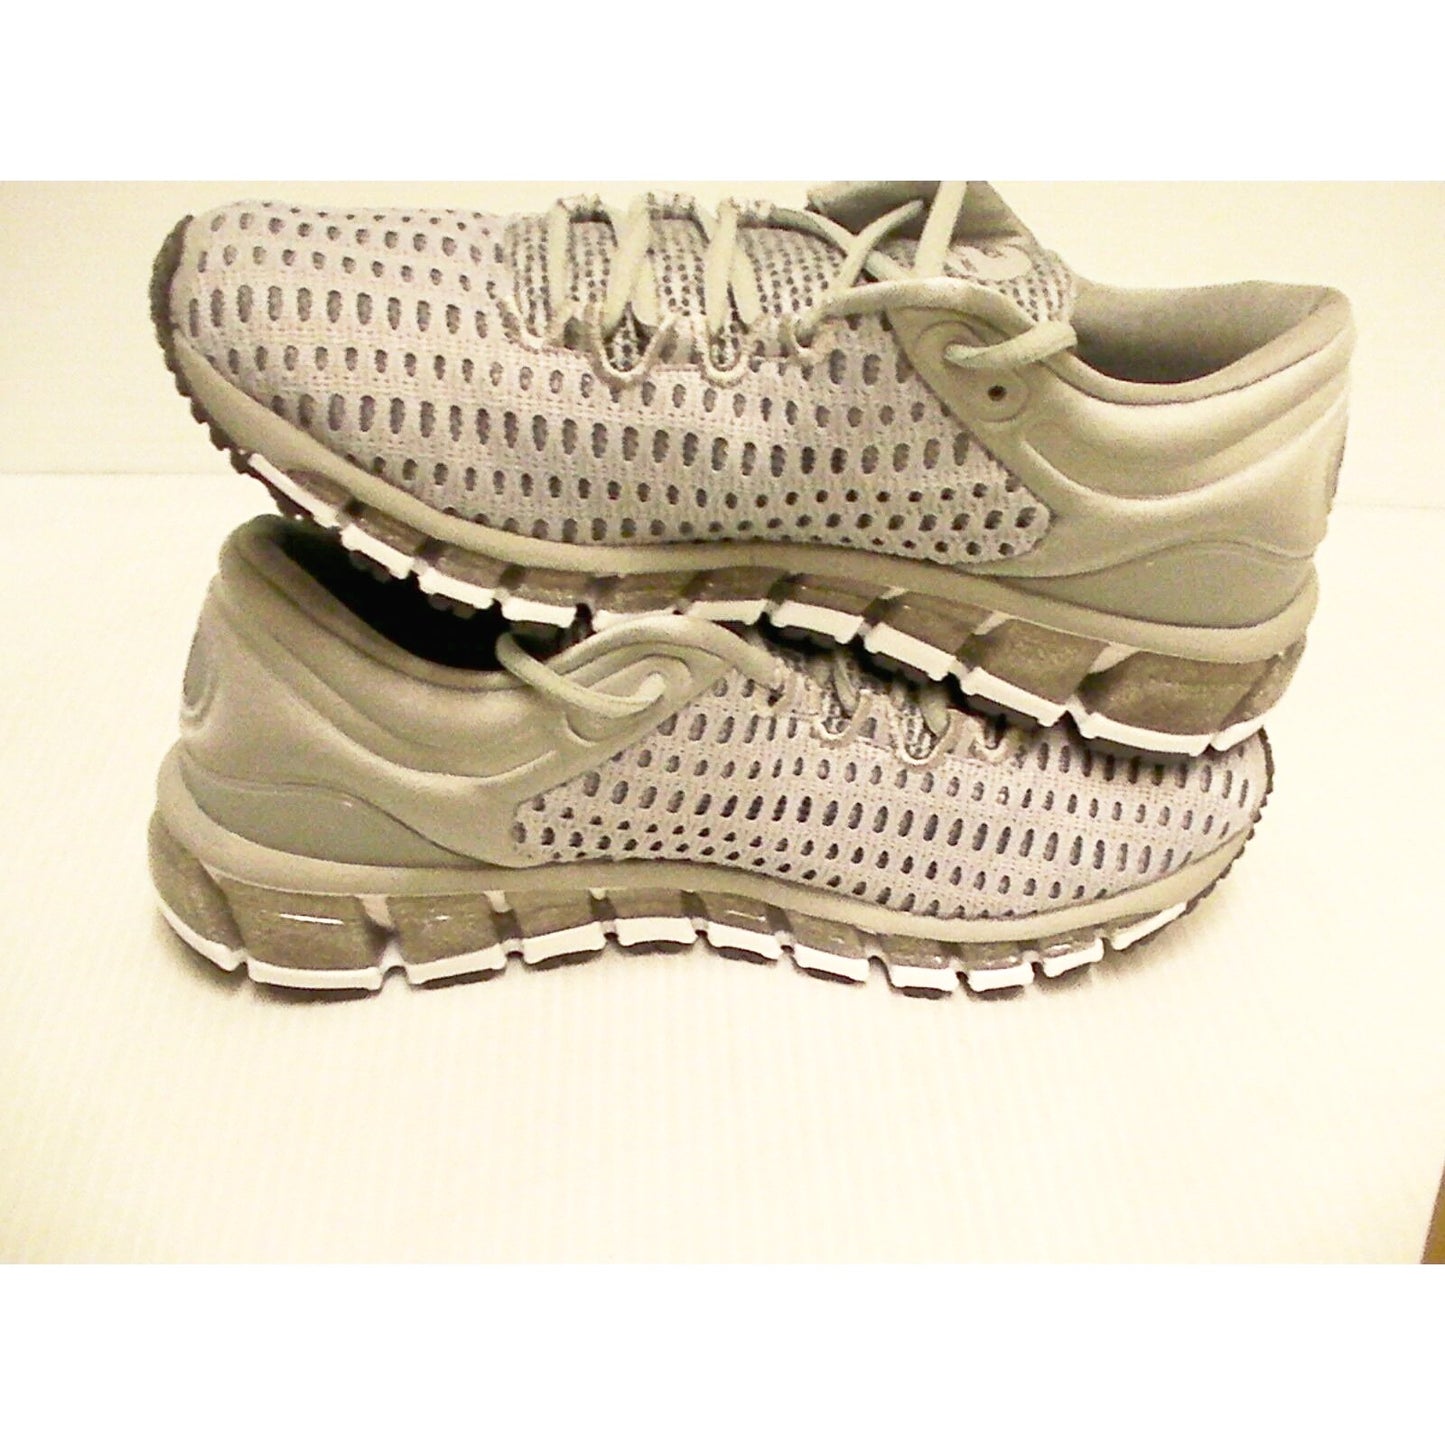 Asics women's gel quantum 360 shift mid grey running shoes size 7 us